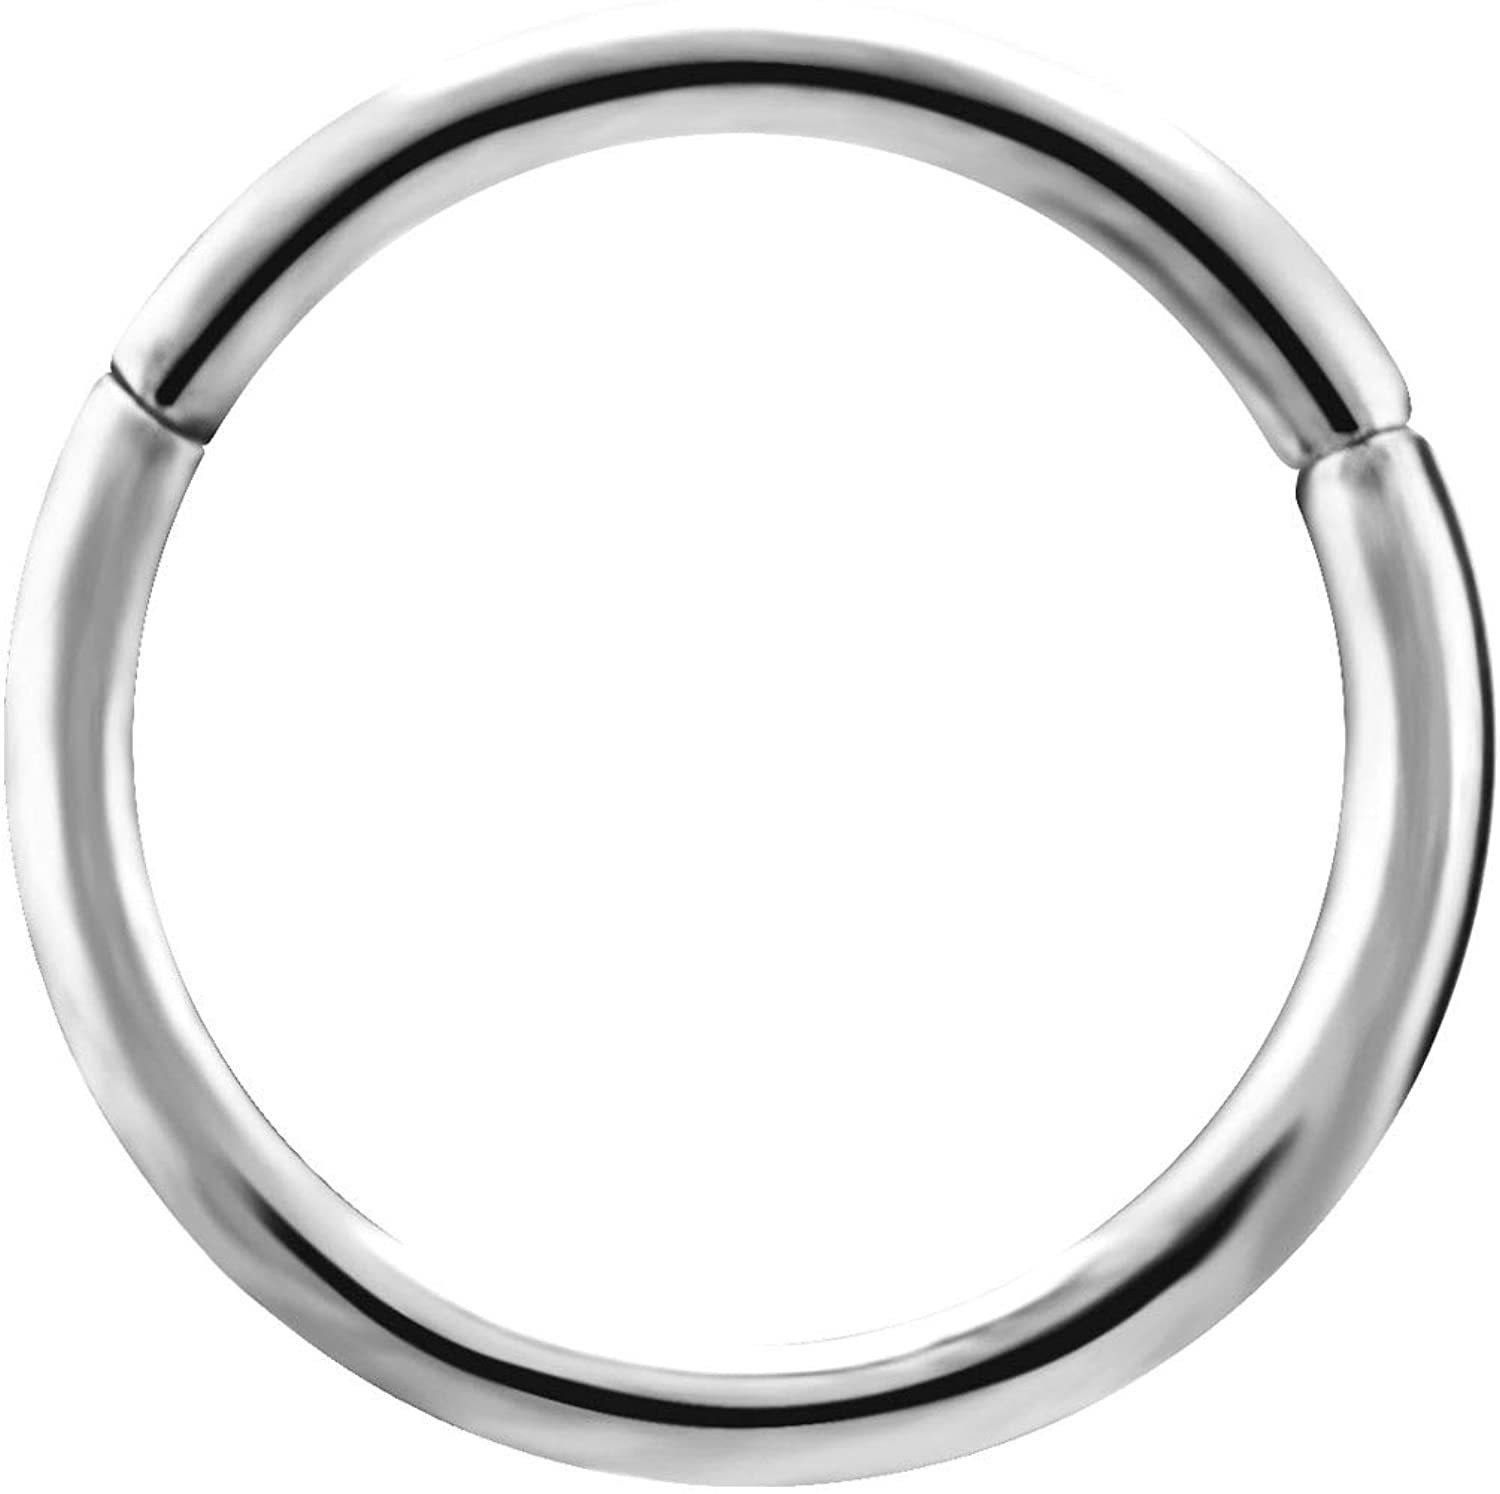 G23 Charnier/Septum Hinged Karisma Karisma Clicker Helix Ring Piercing-Set 1,0x7mm Ohrring Titan Segmentring Piercing Silber -